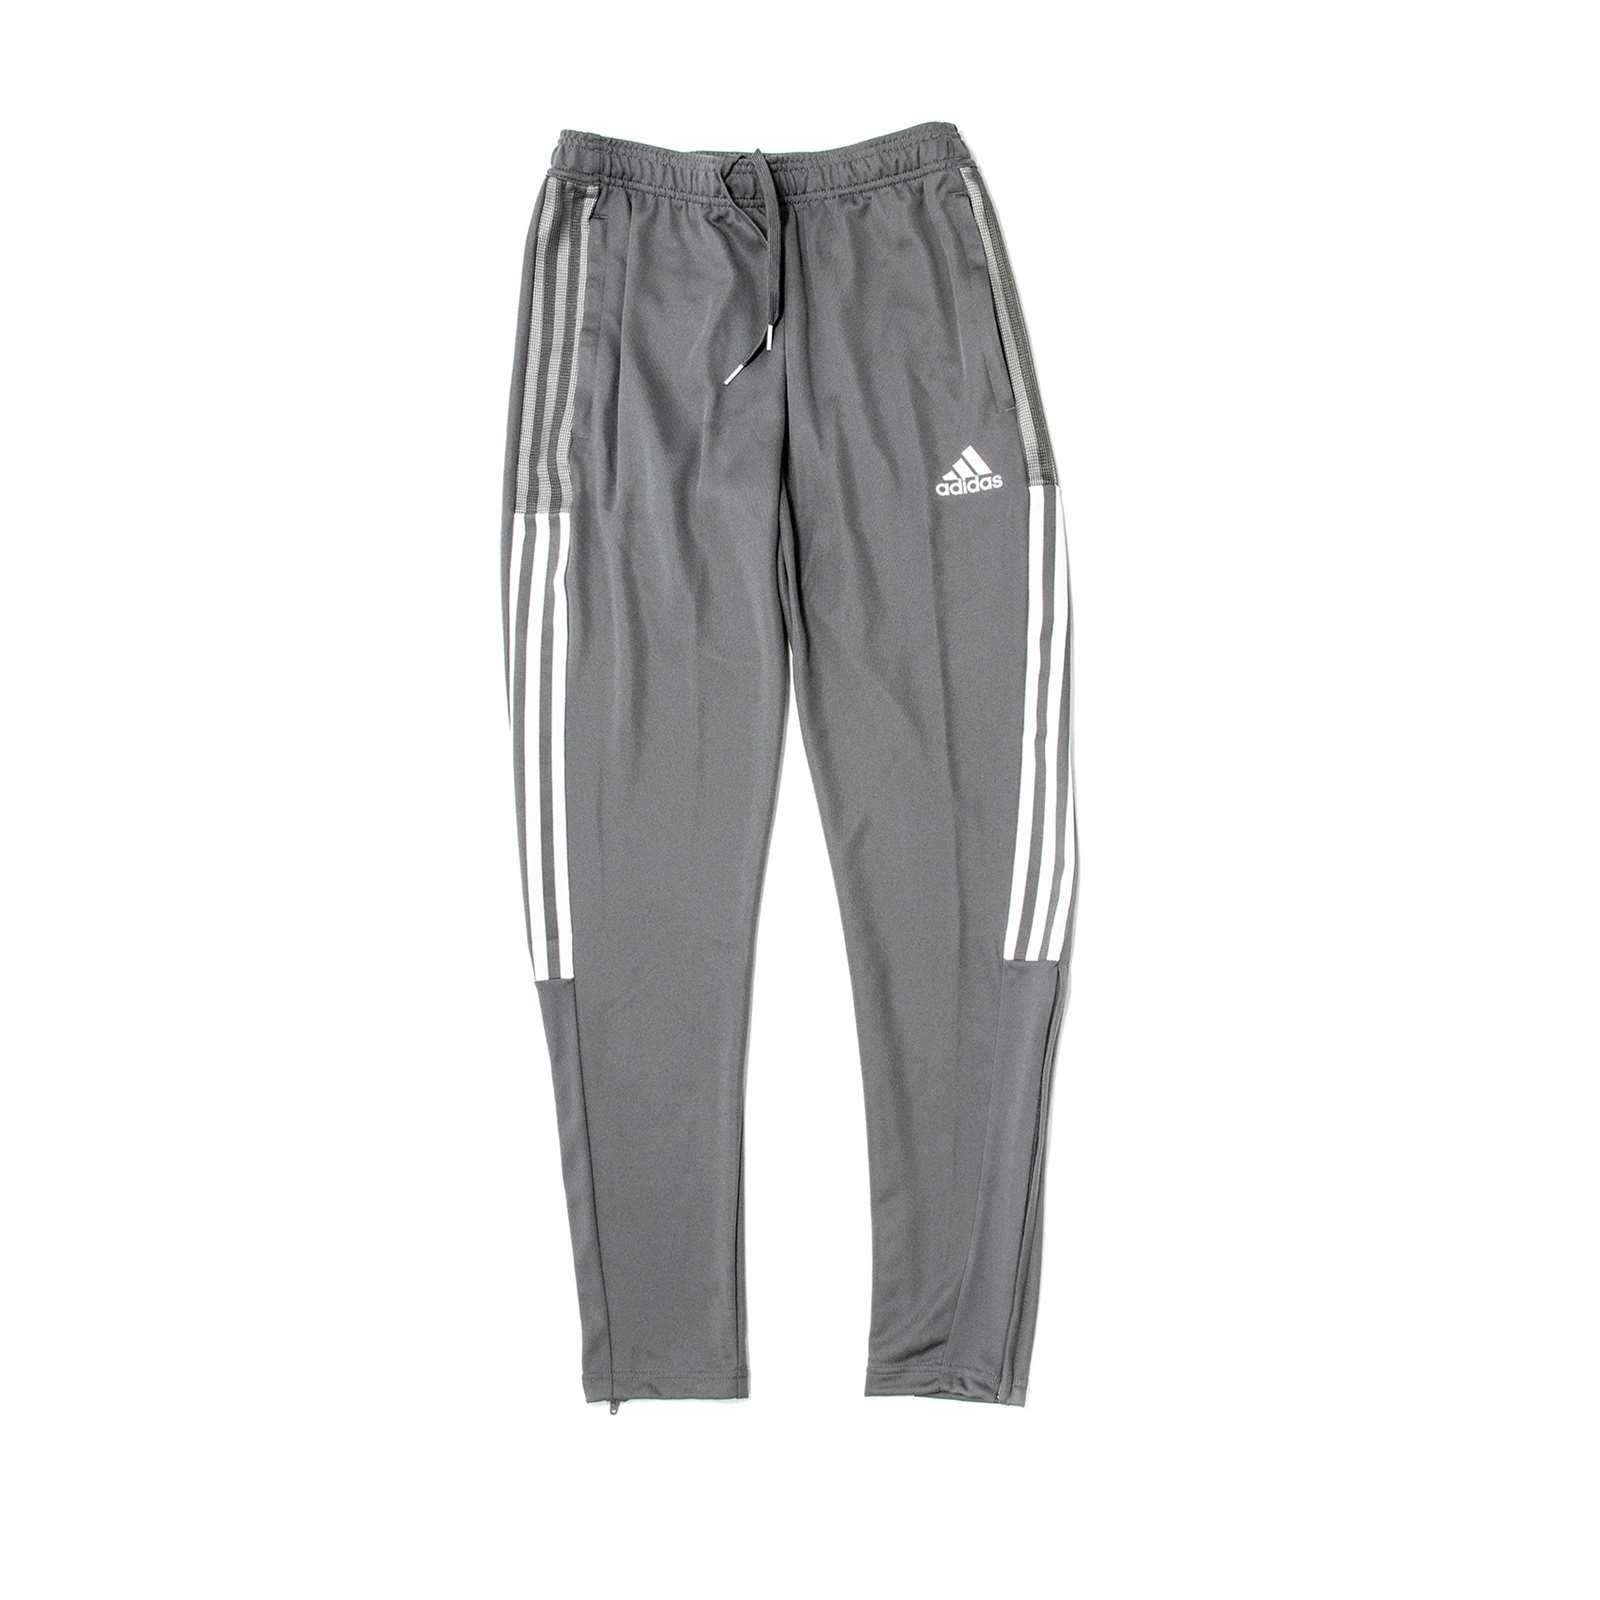 Men's Adidas Team Grey Four Tiro 21 Track Pants - XL - image 2 of 3